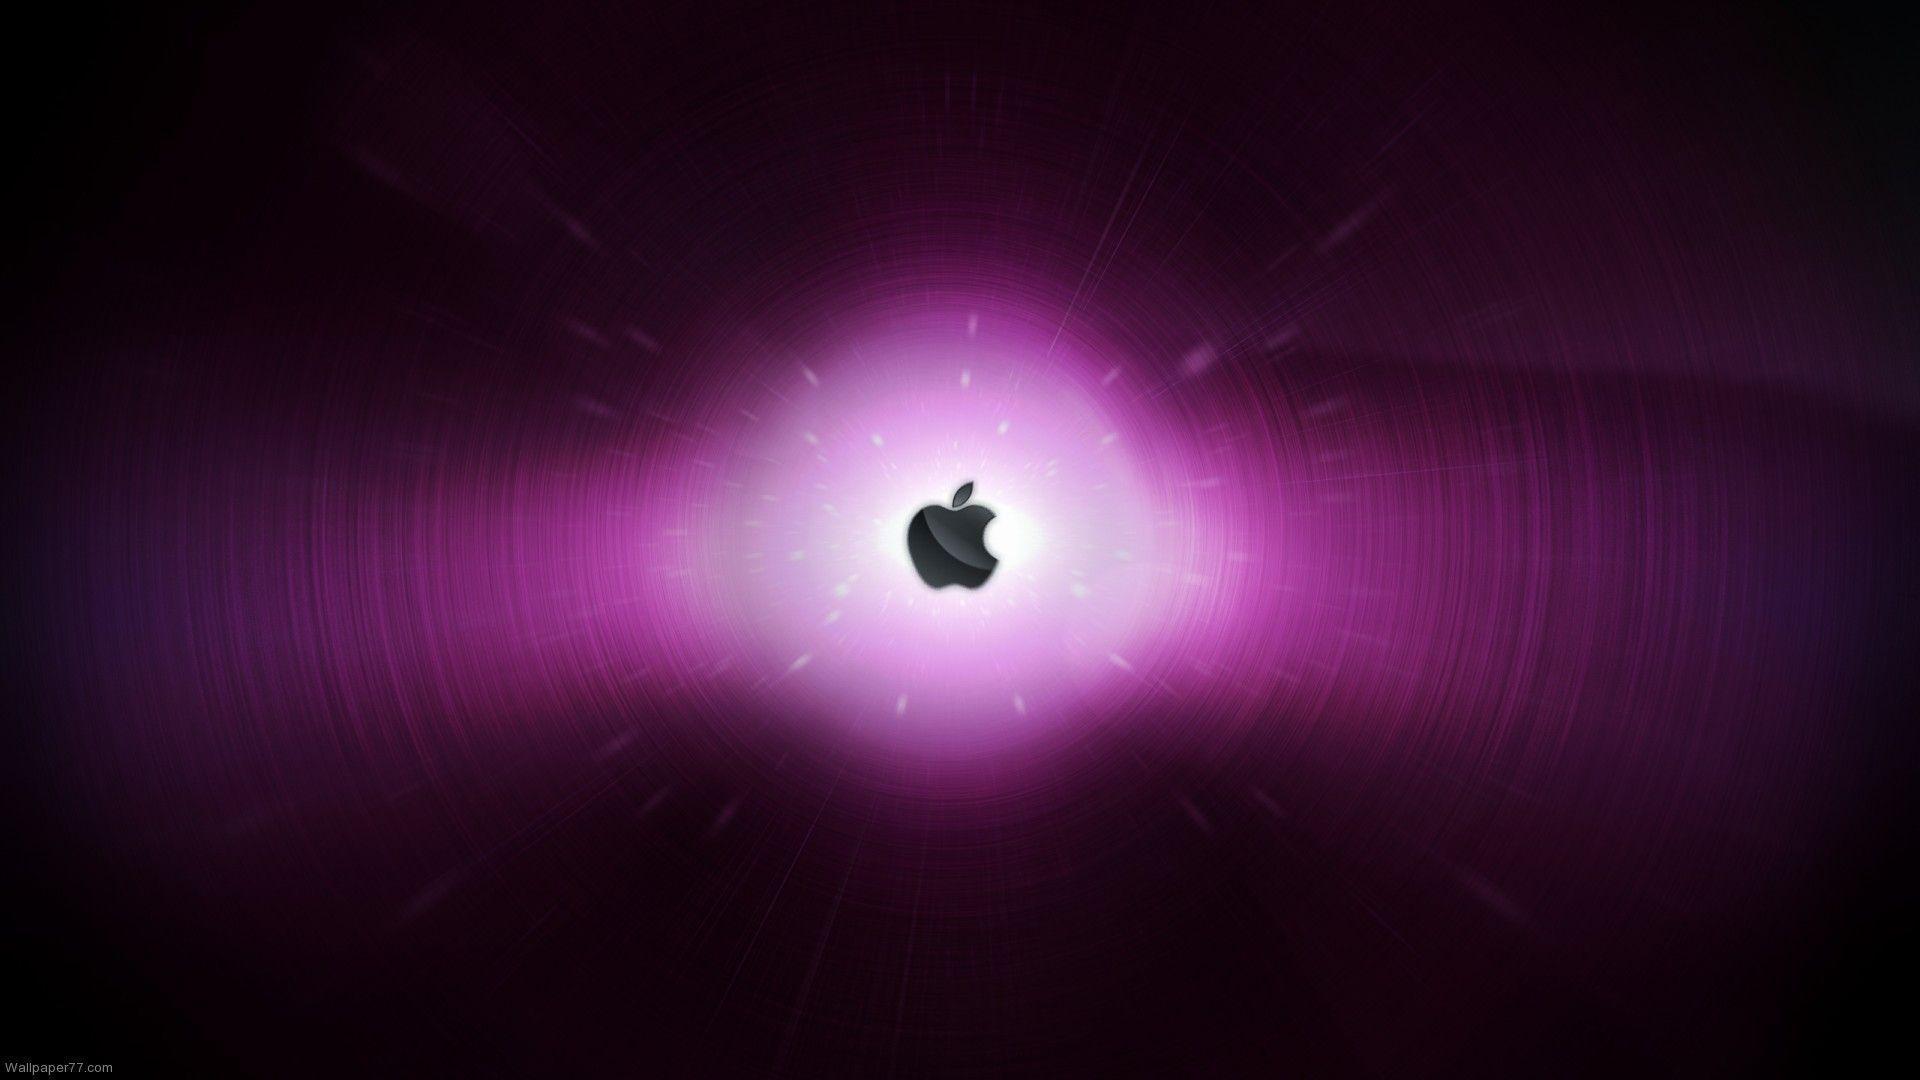 Apple in Purple, 1920x1080 pixels : Wallpapers tagged Apple